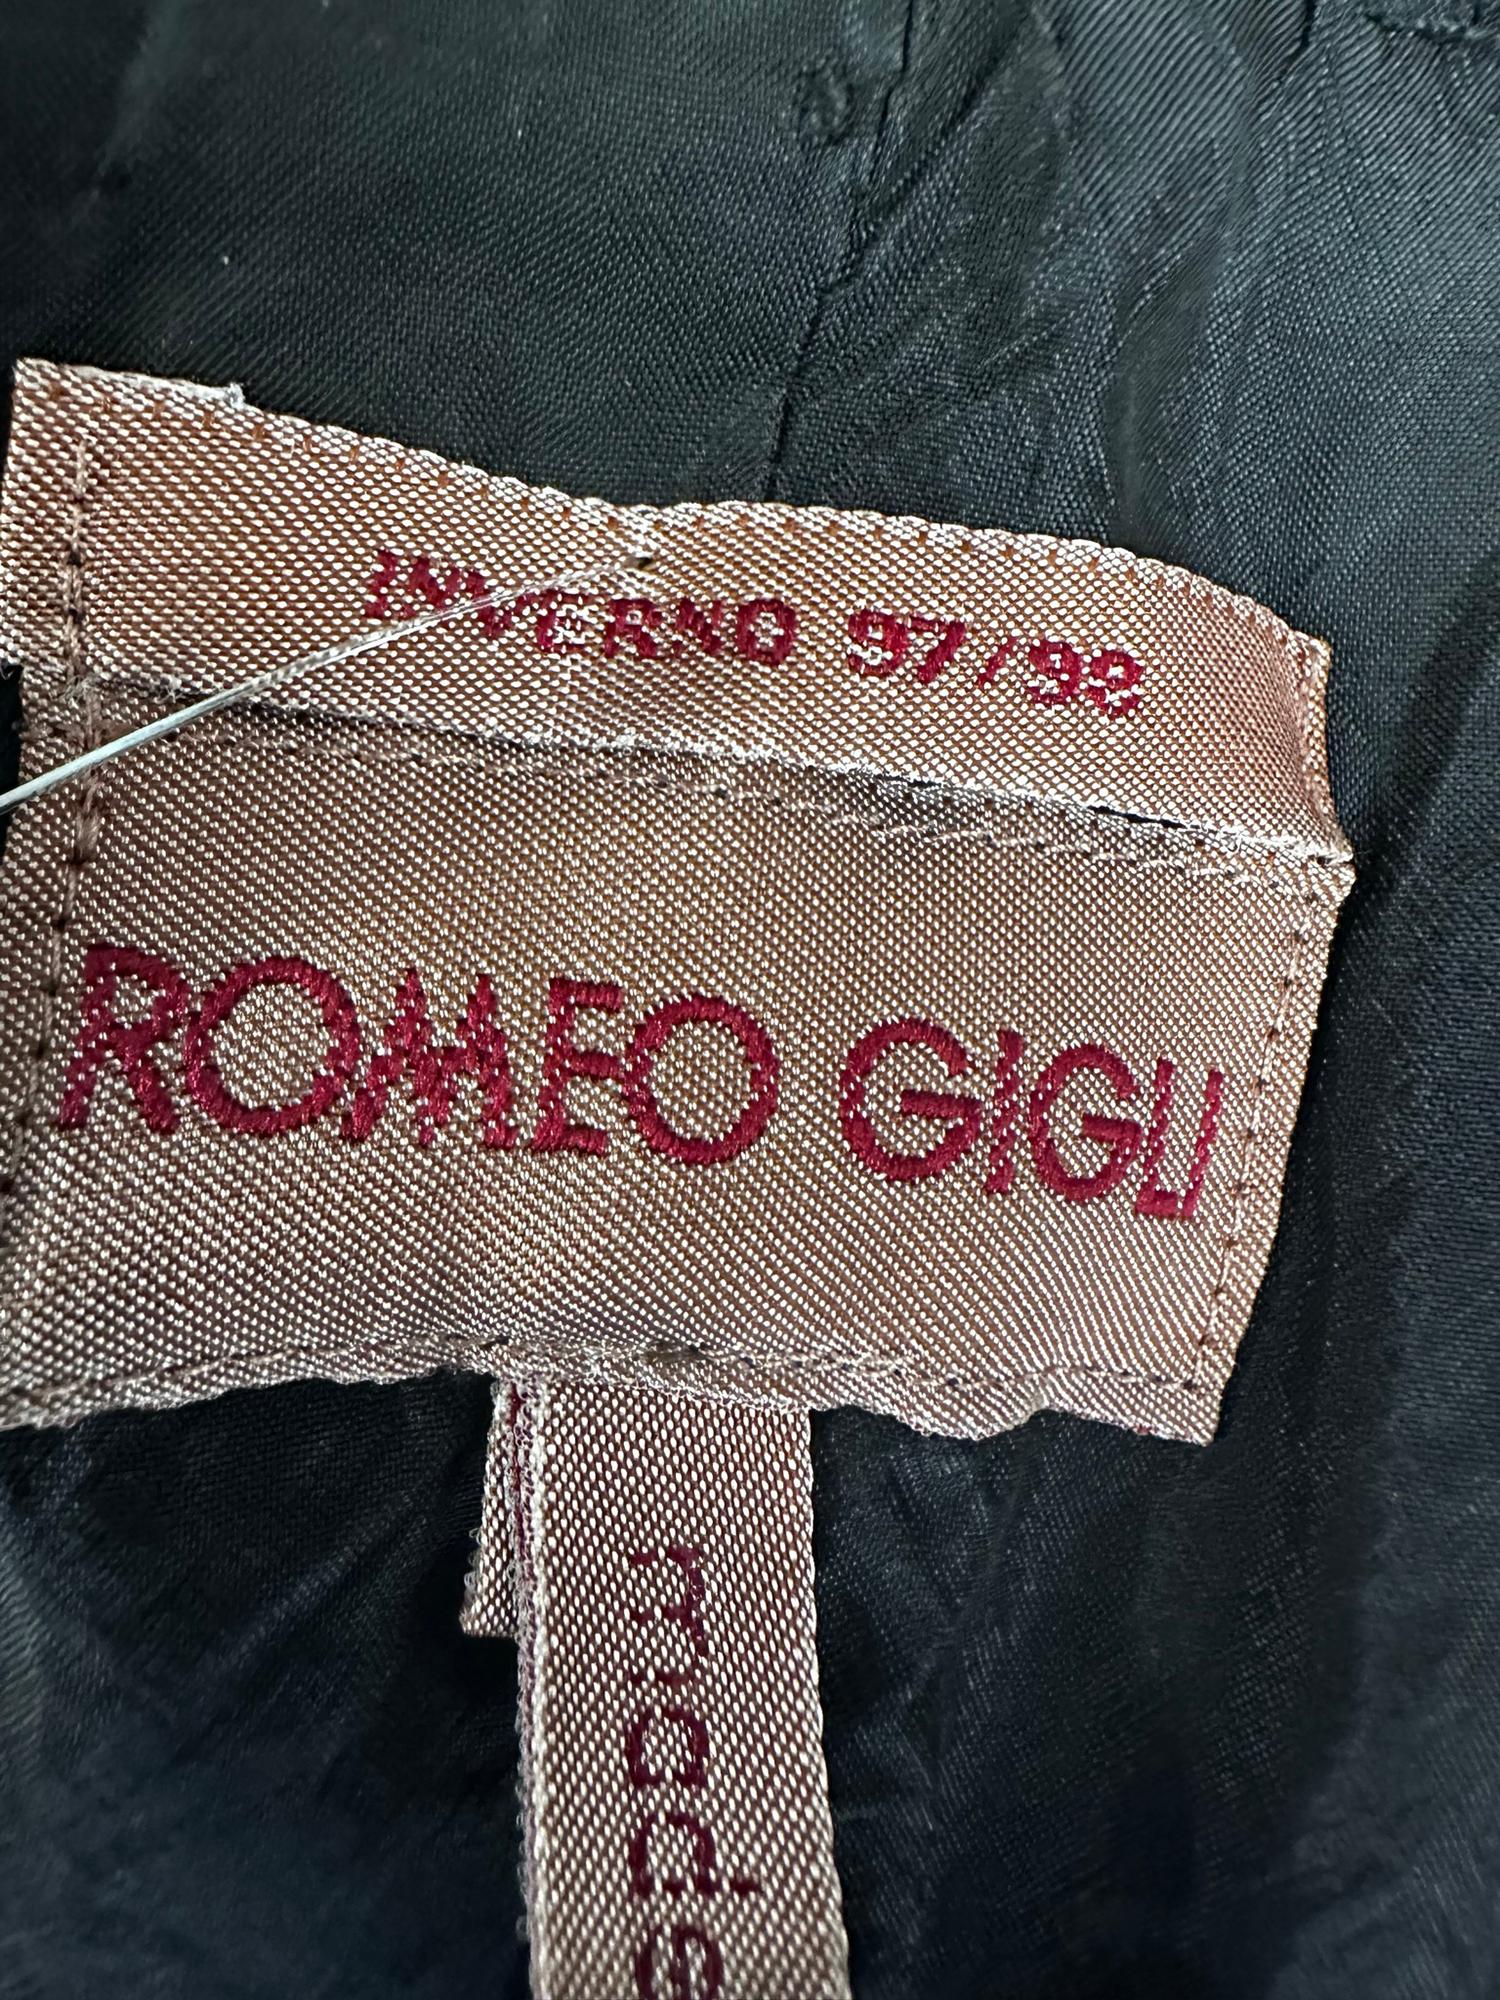 Romeo Gigli Black Dot Velvet Notched Lapel Patch Pocket Jacket Winter 97/98 For Sale 8